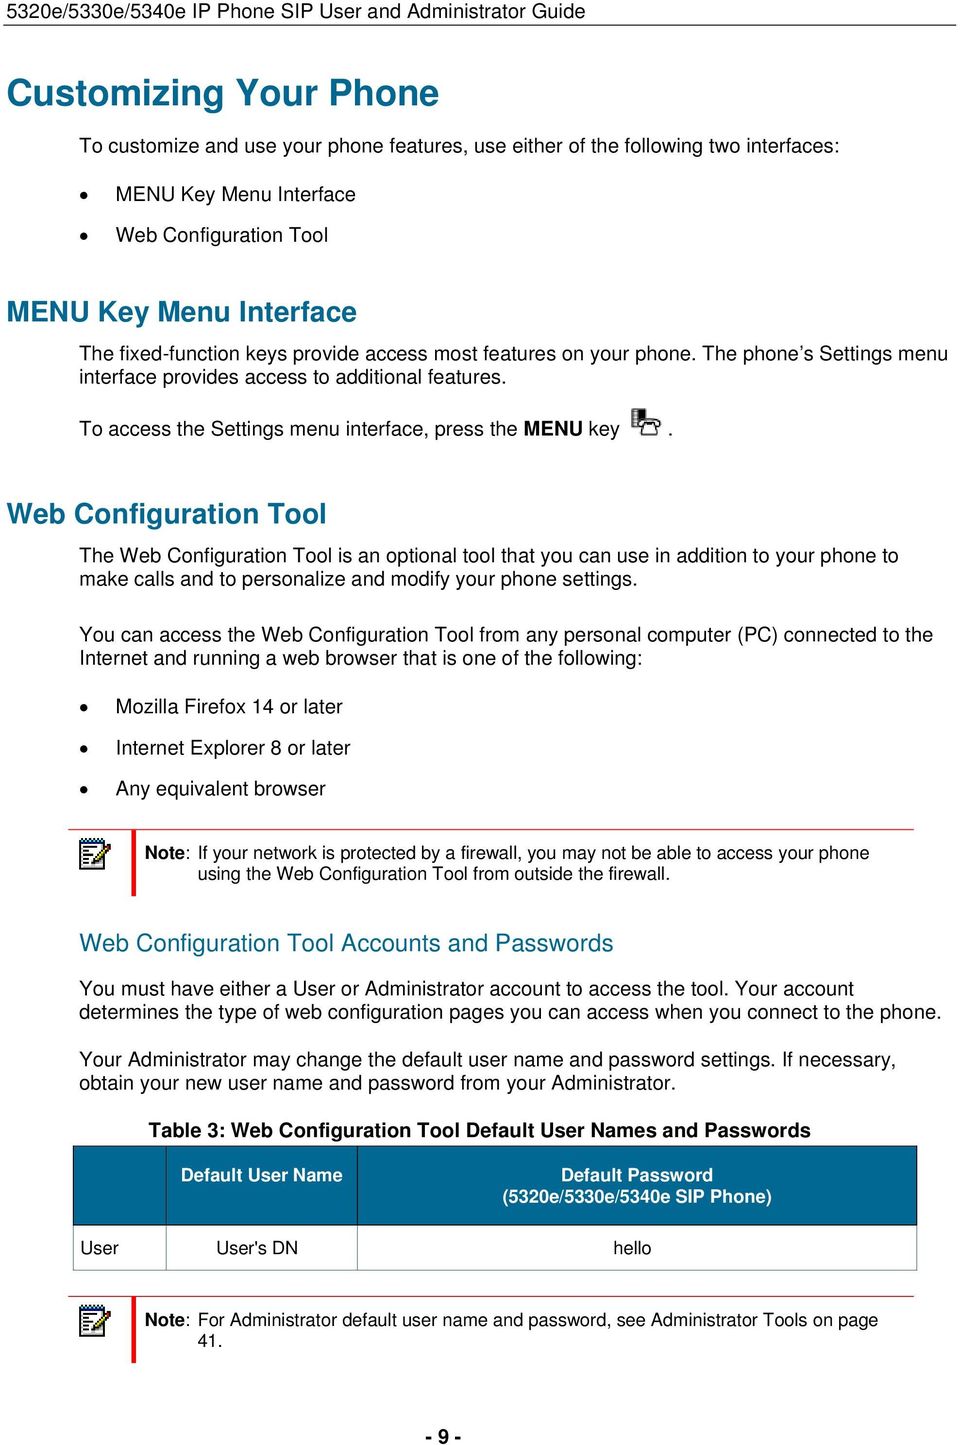 To access the Settings menu interface, press the MENU key.